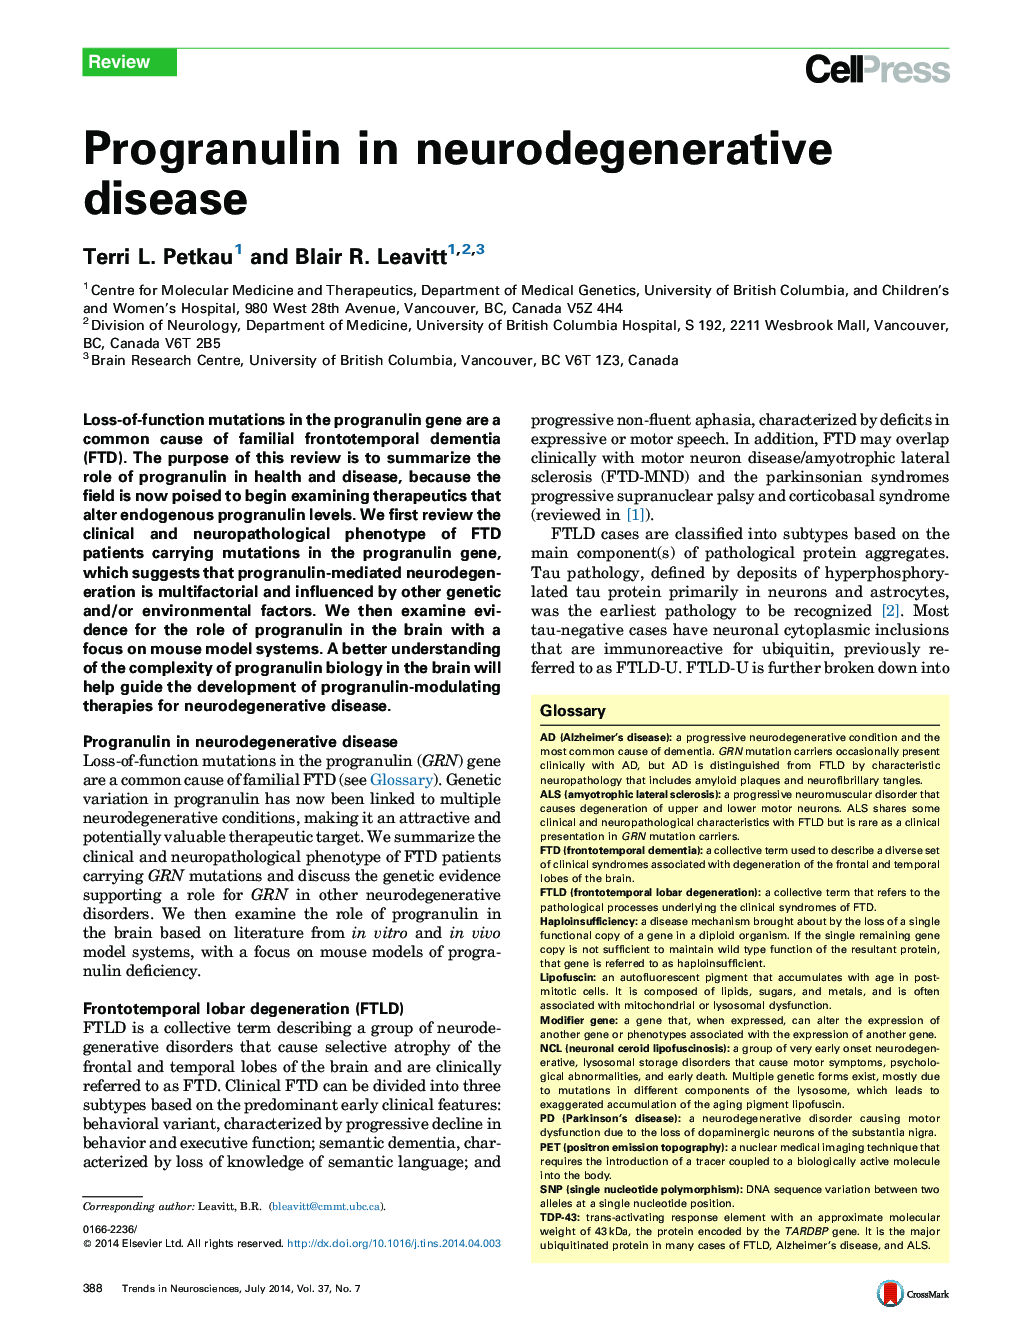 Progranulin in neurodegenerative disease